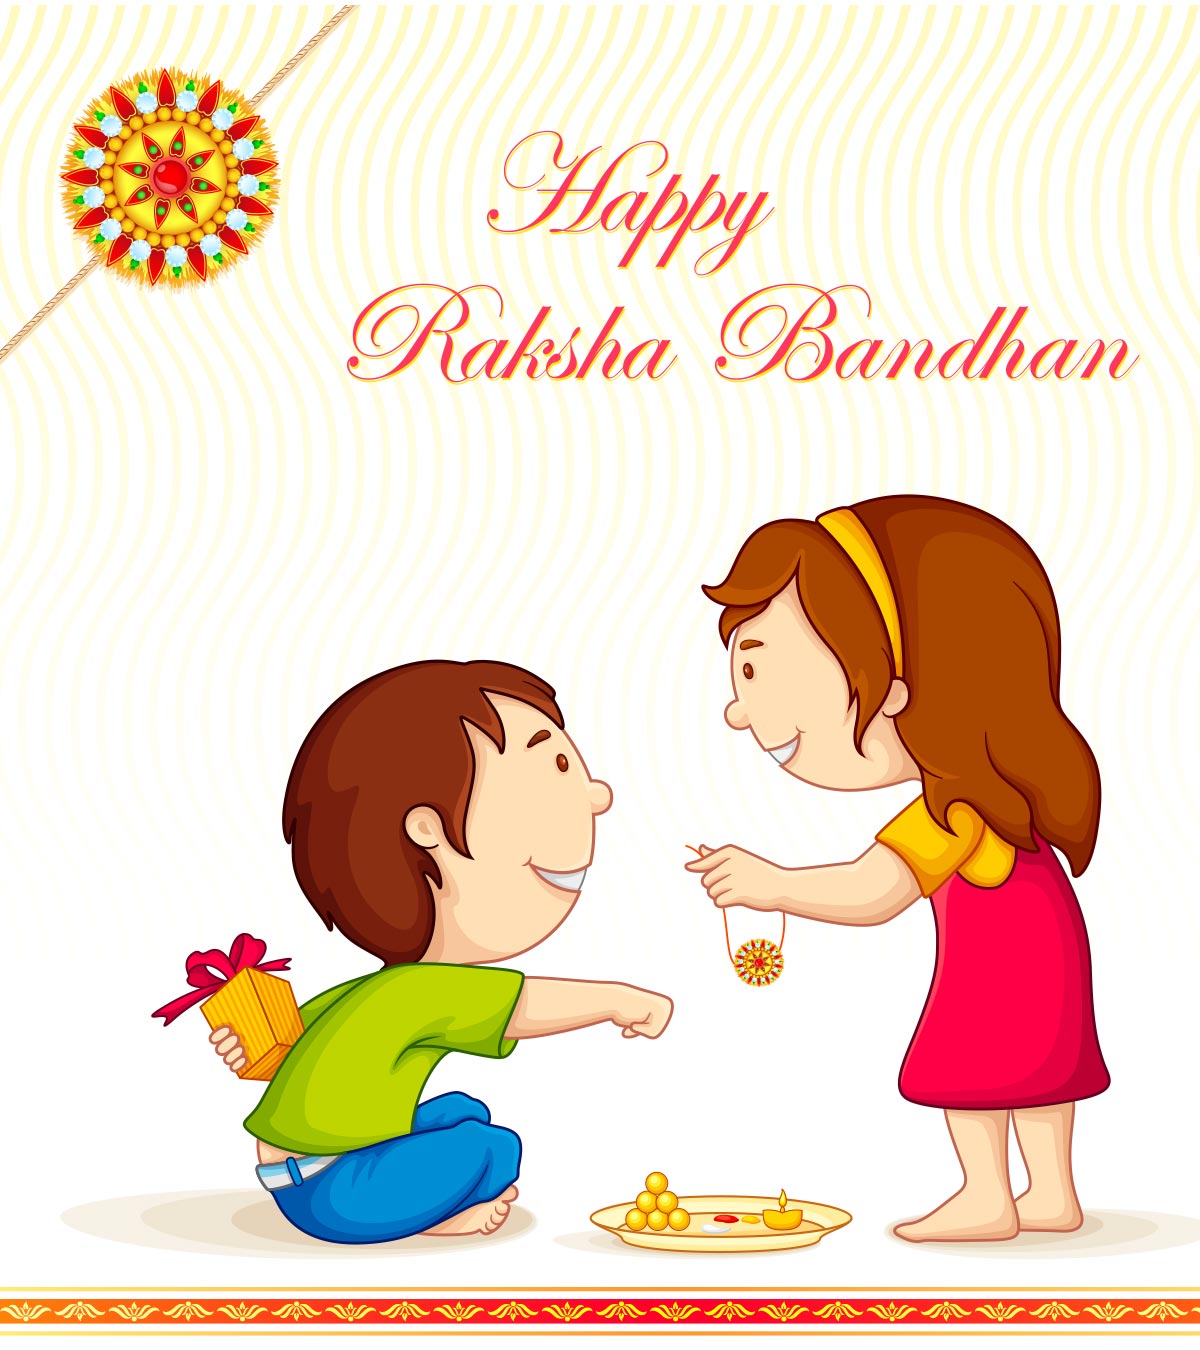 Happy Raksha Bandhan Images, Pictures, Wallpapers, Photos ...